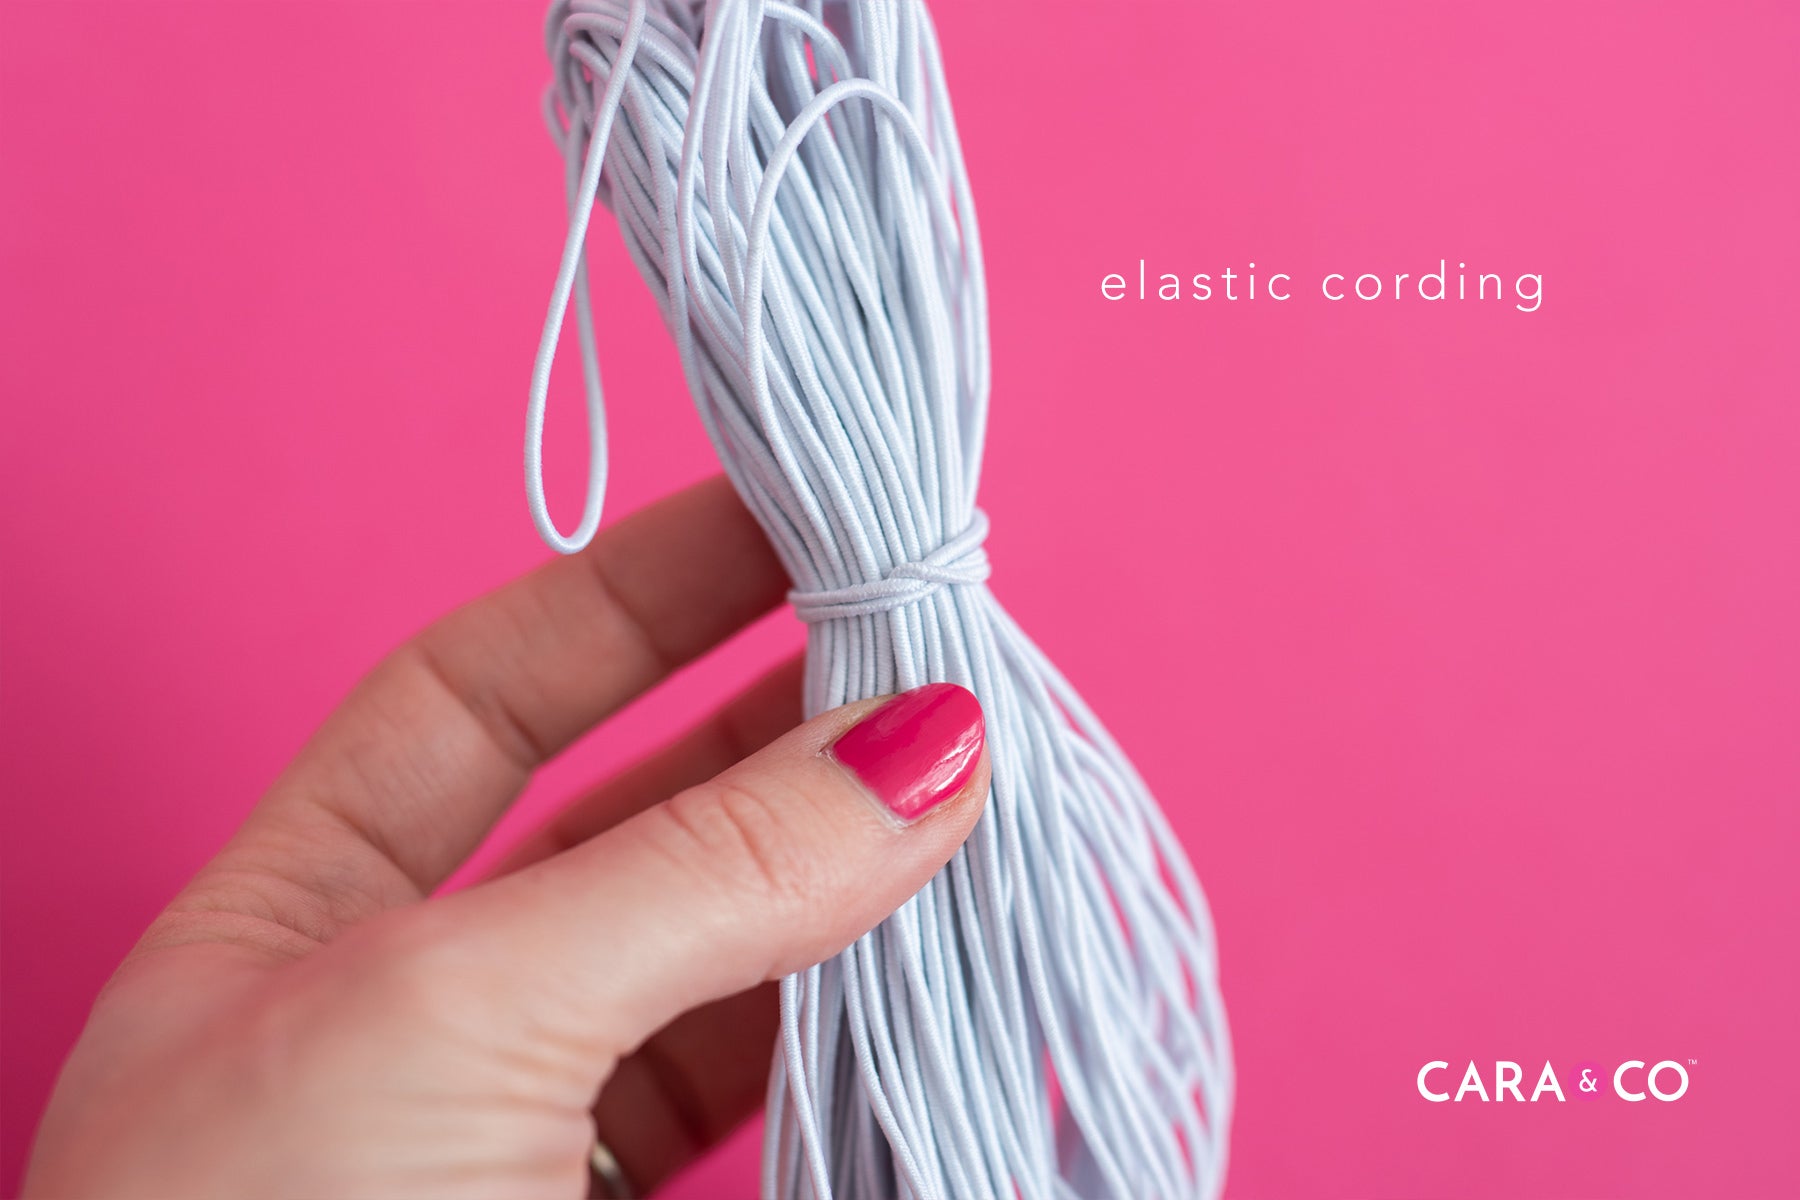 Elastic Cording - Silicone Crafting - Cara & Co